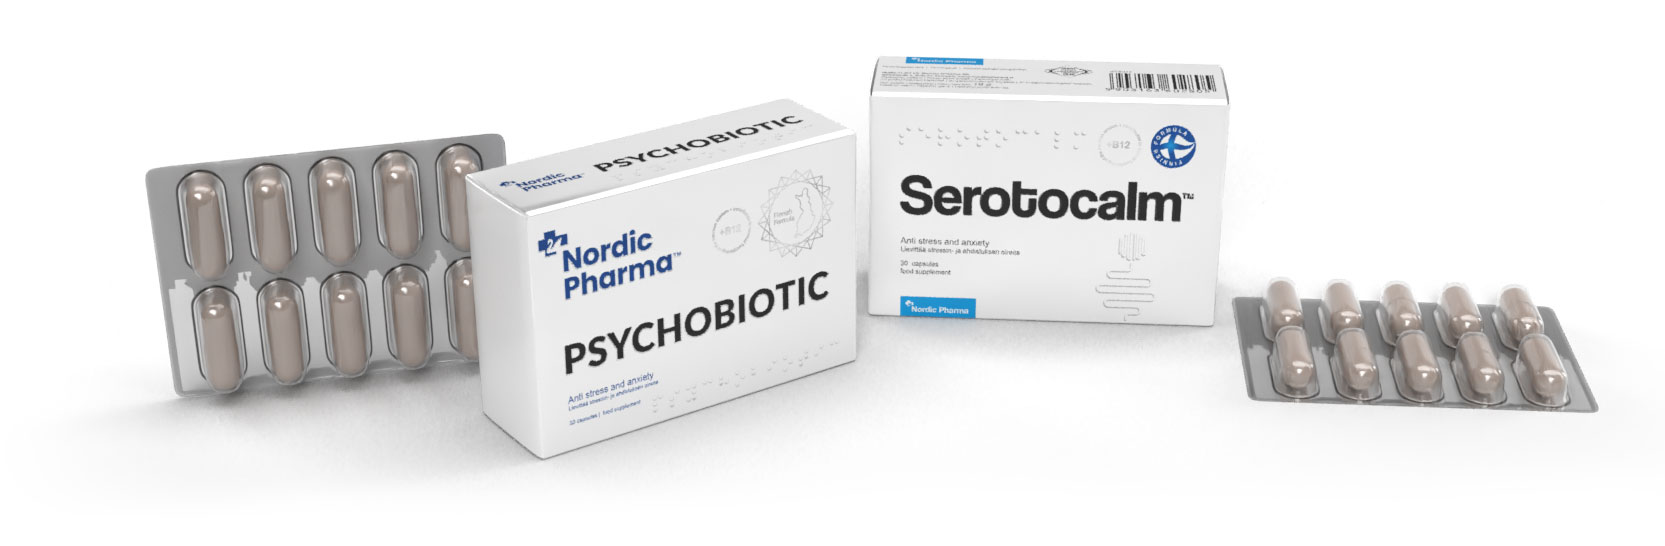 nordic pharma products presentation psychobiotic and serotocalm